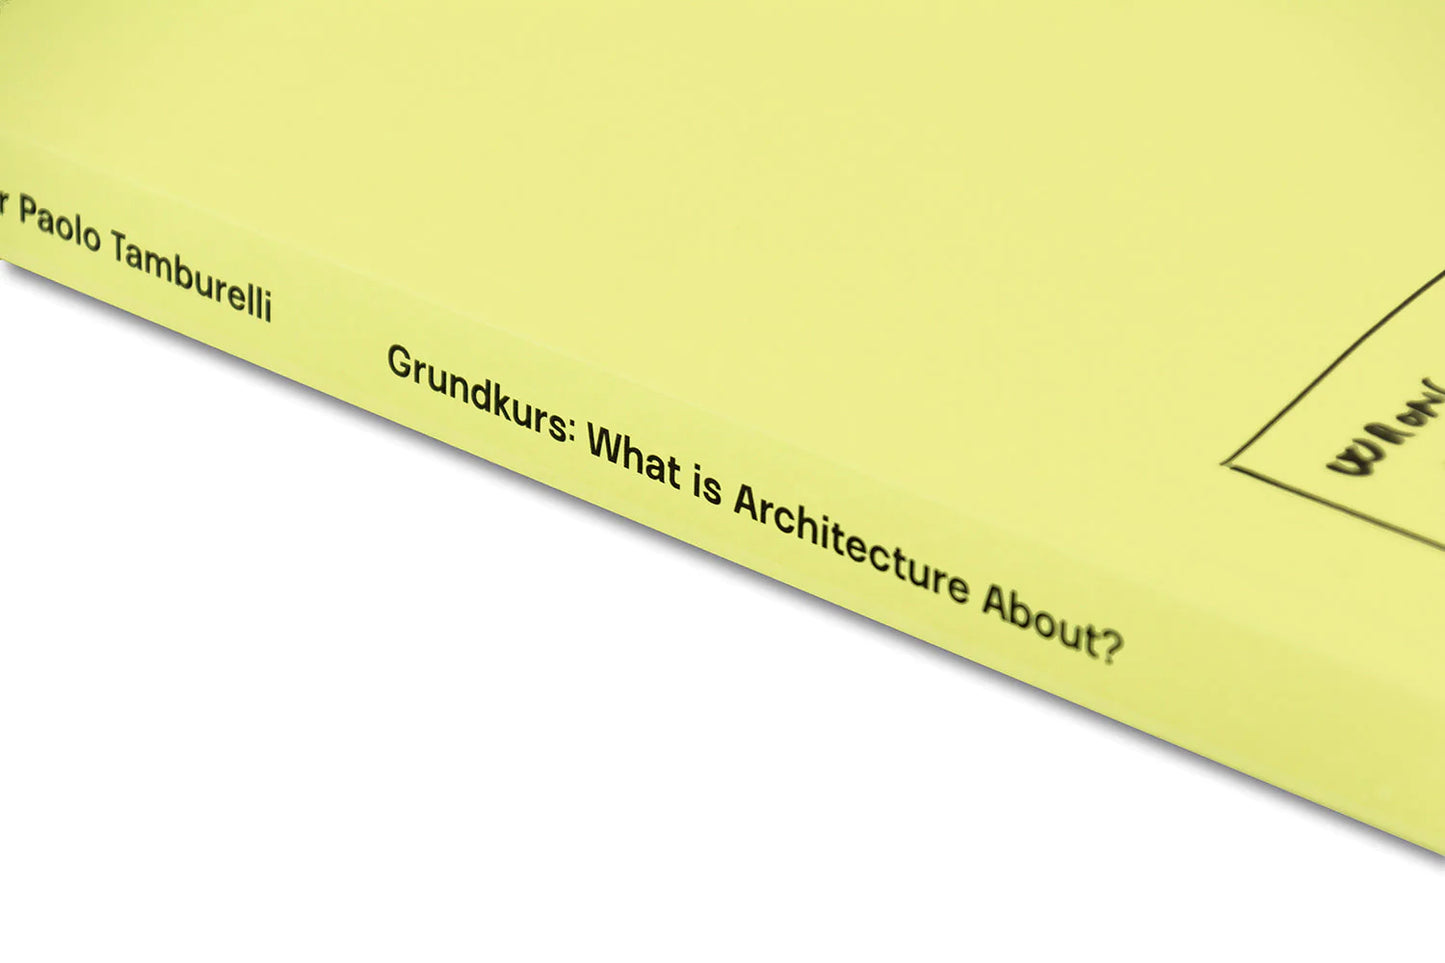 Pier Paolo Tamburelli - Grundkurs: What is Architecture About?